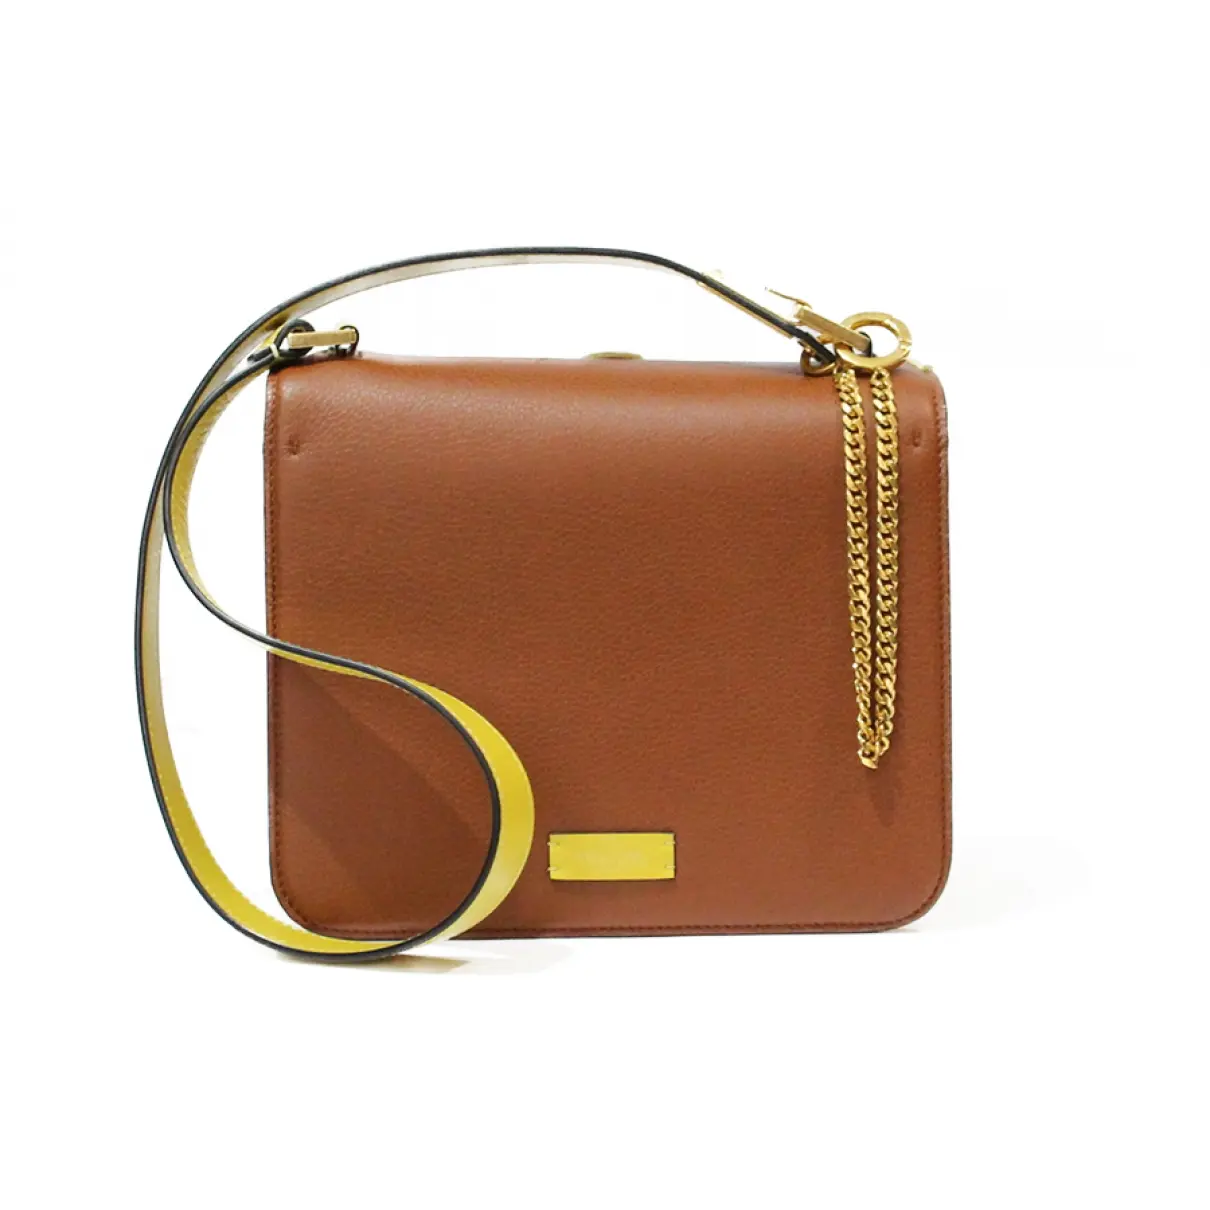 Buy Valentino Garavani Vsling leather handbag online